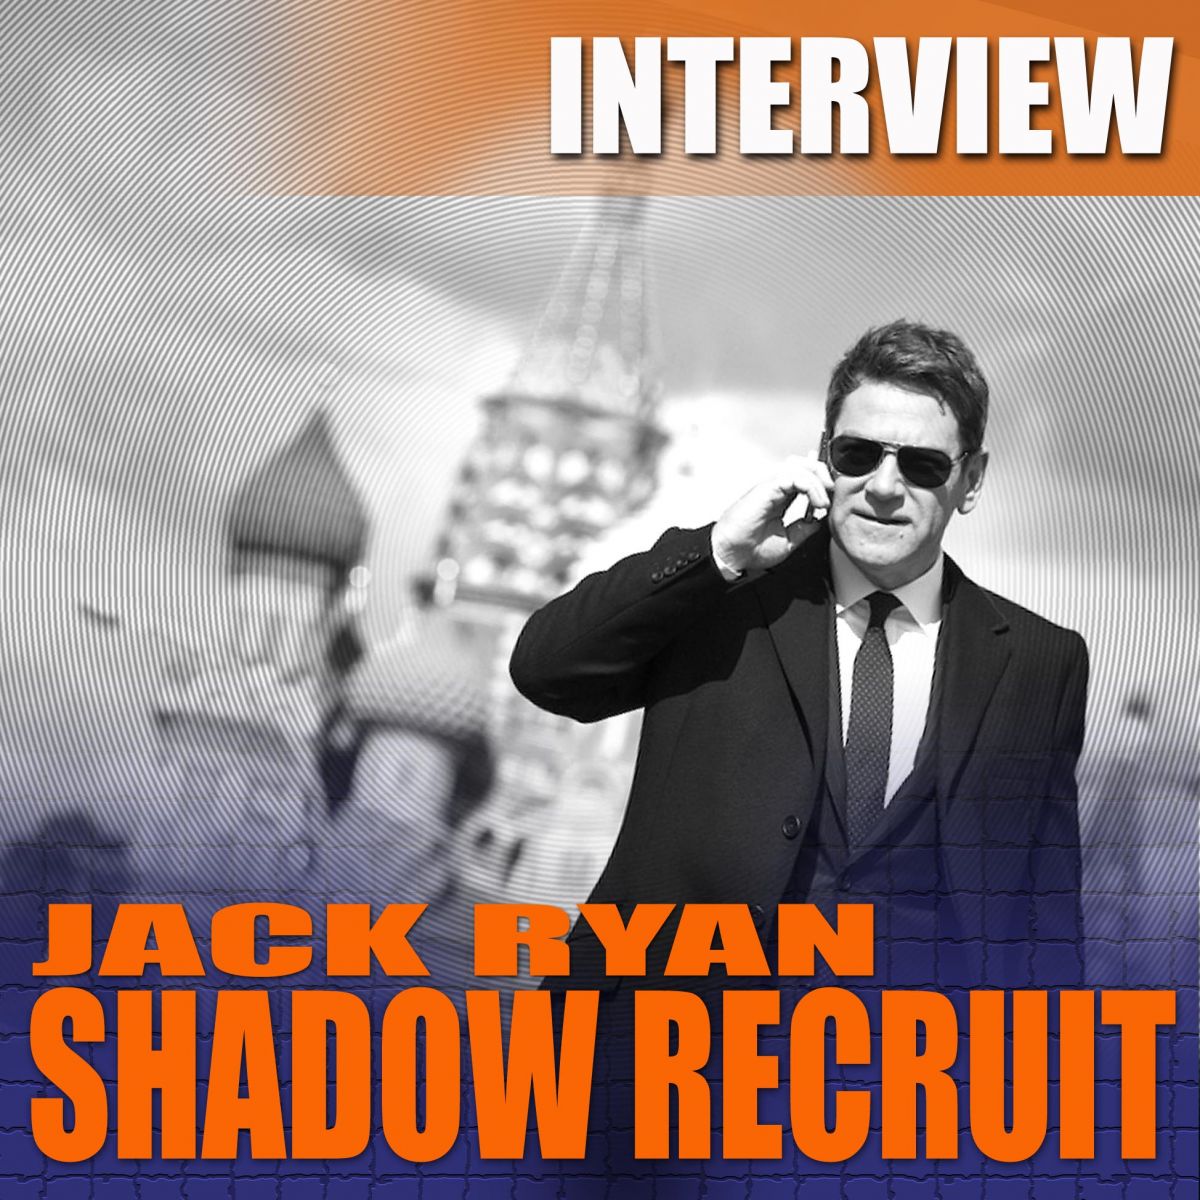 Jack Ryan Shadow Recruit interviews